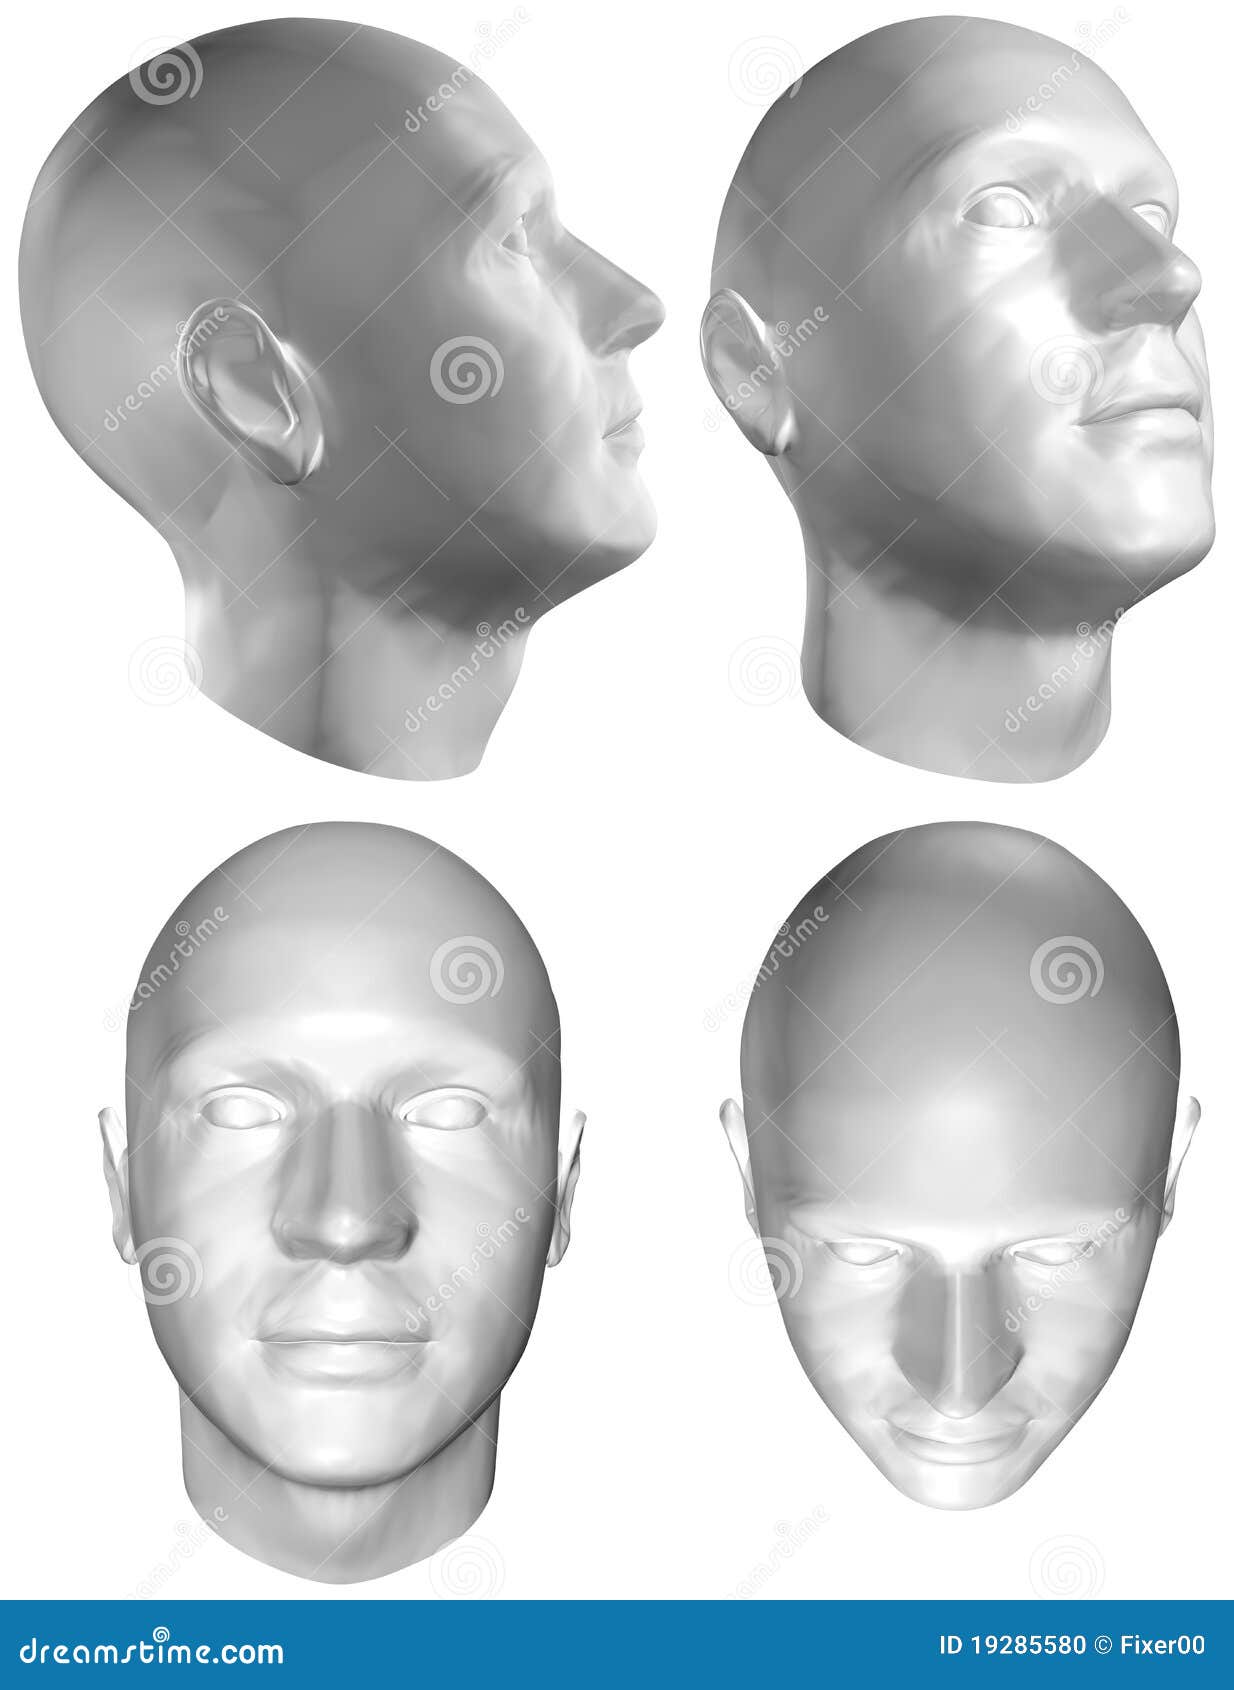 Free 3d Model Of Human Head